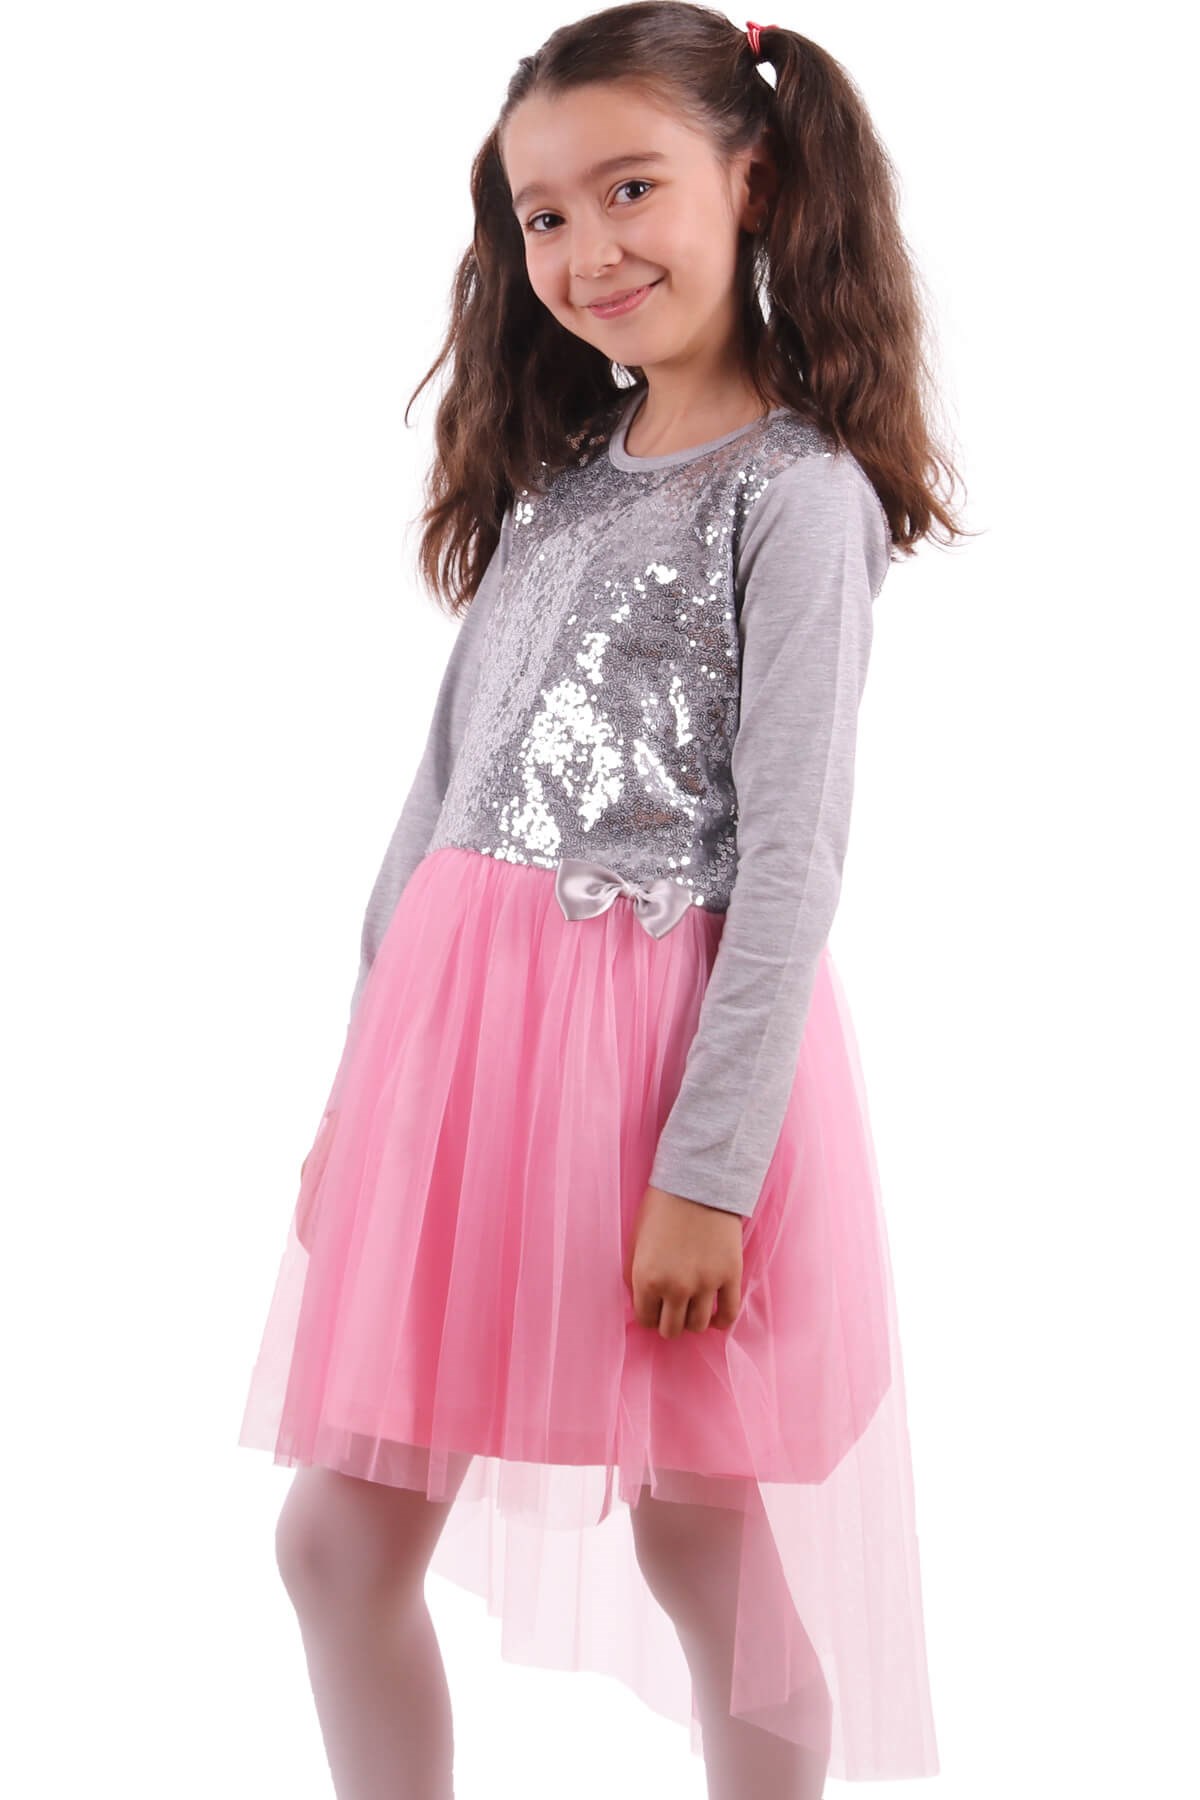 Pullu Pembe 5-10 Yaş - Kız Çocuk Elbisesi | Breeze